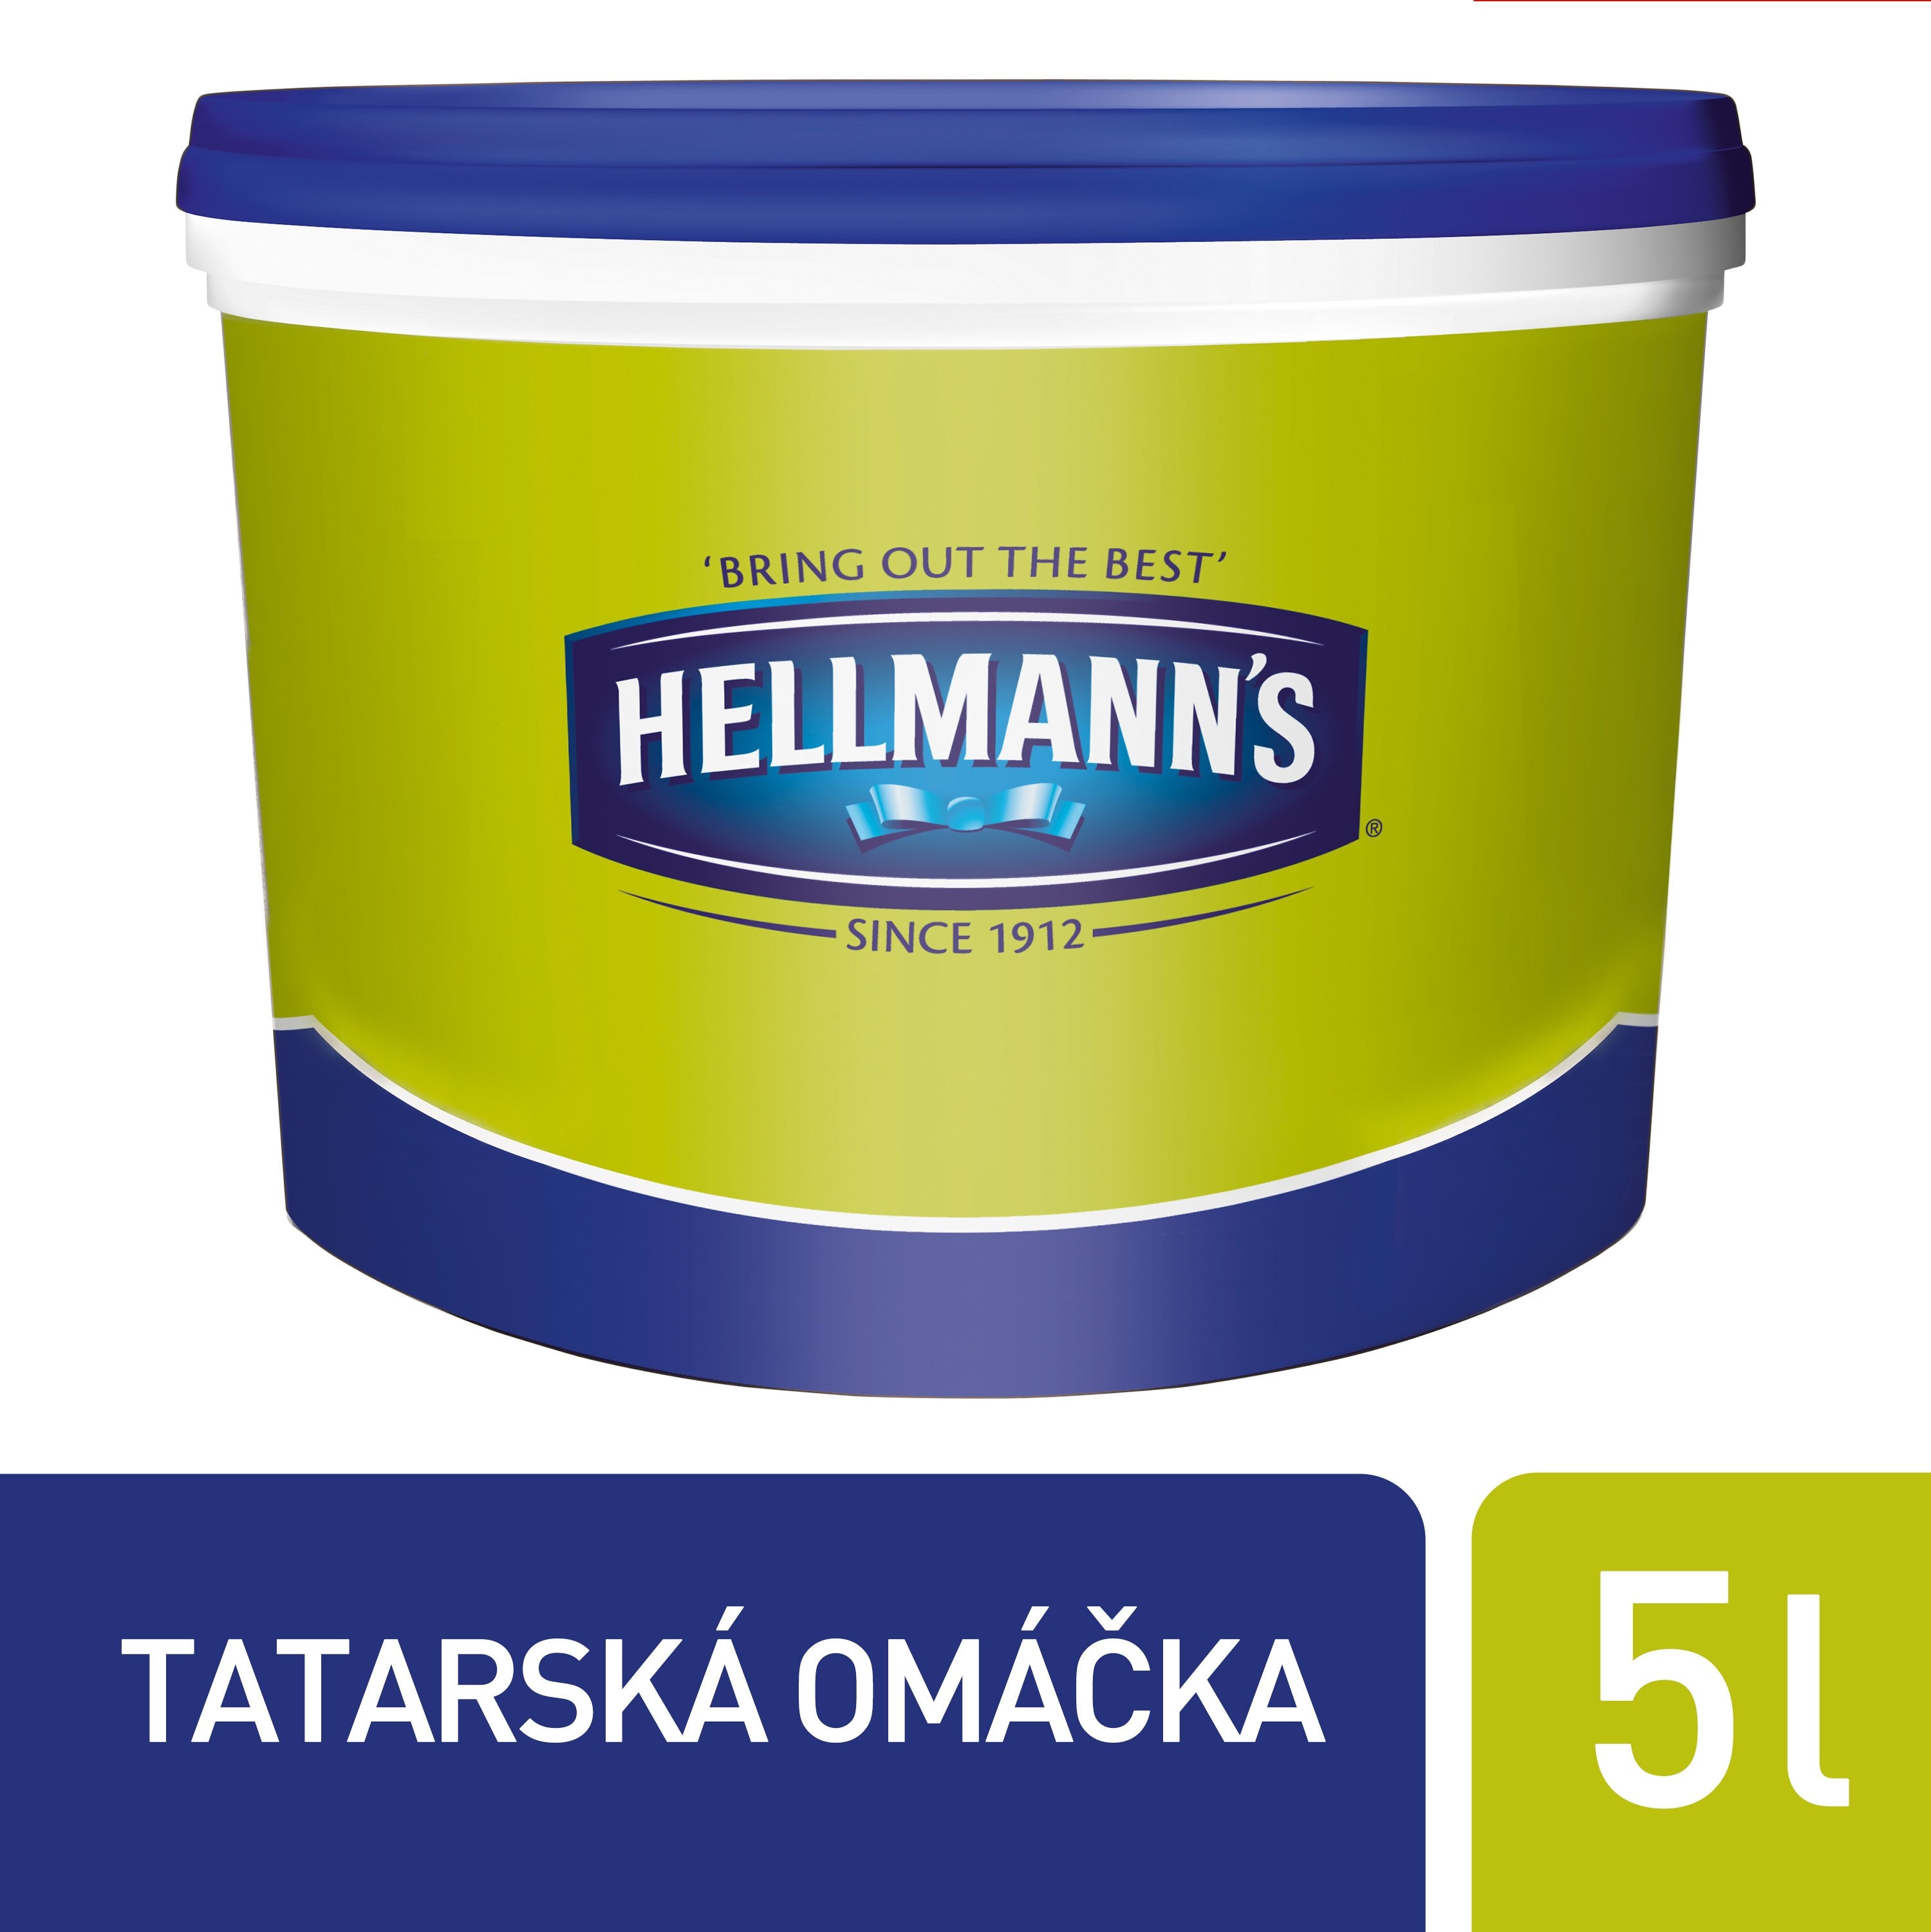 Hellmann's Tatarská omáčka 5 l - 